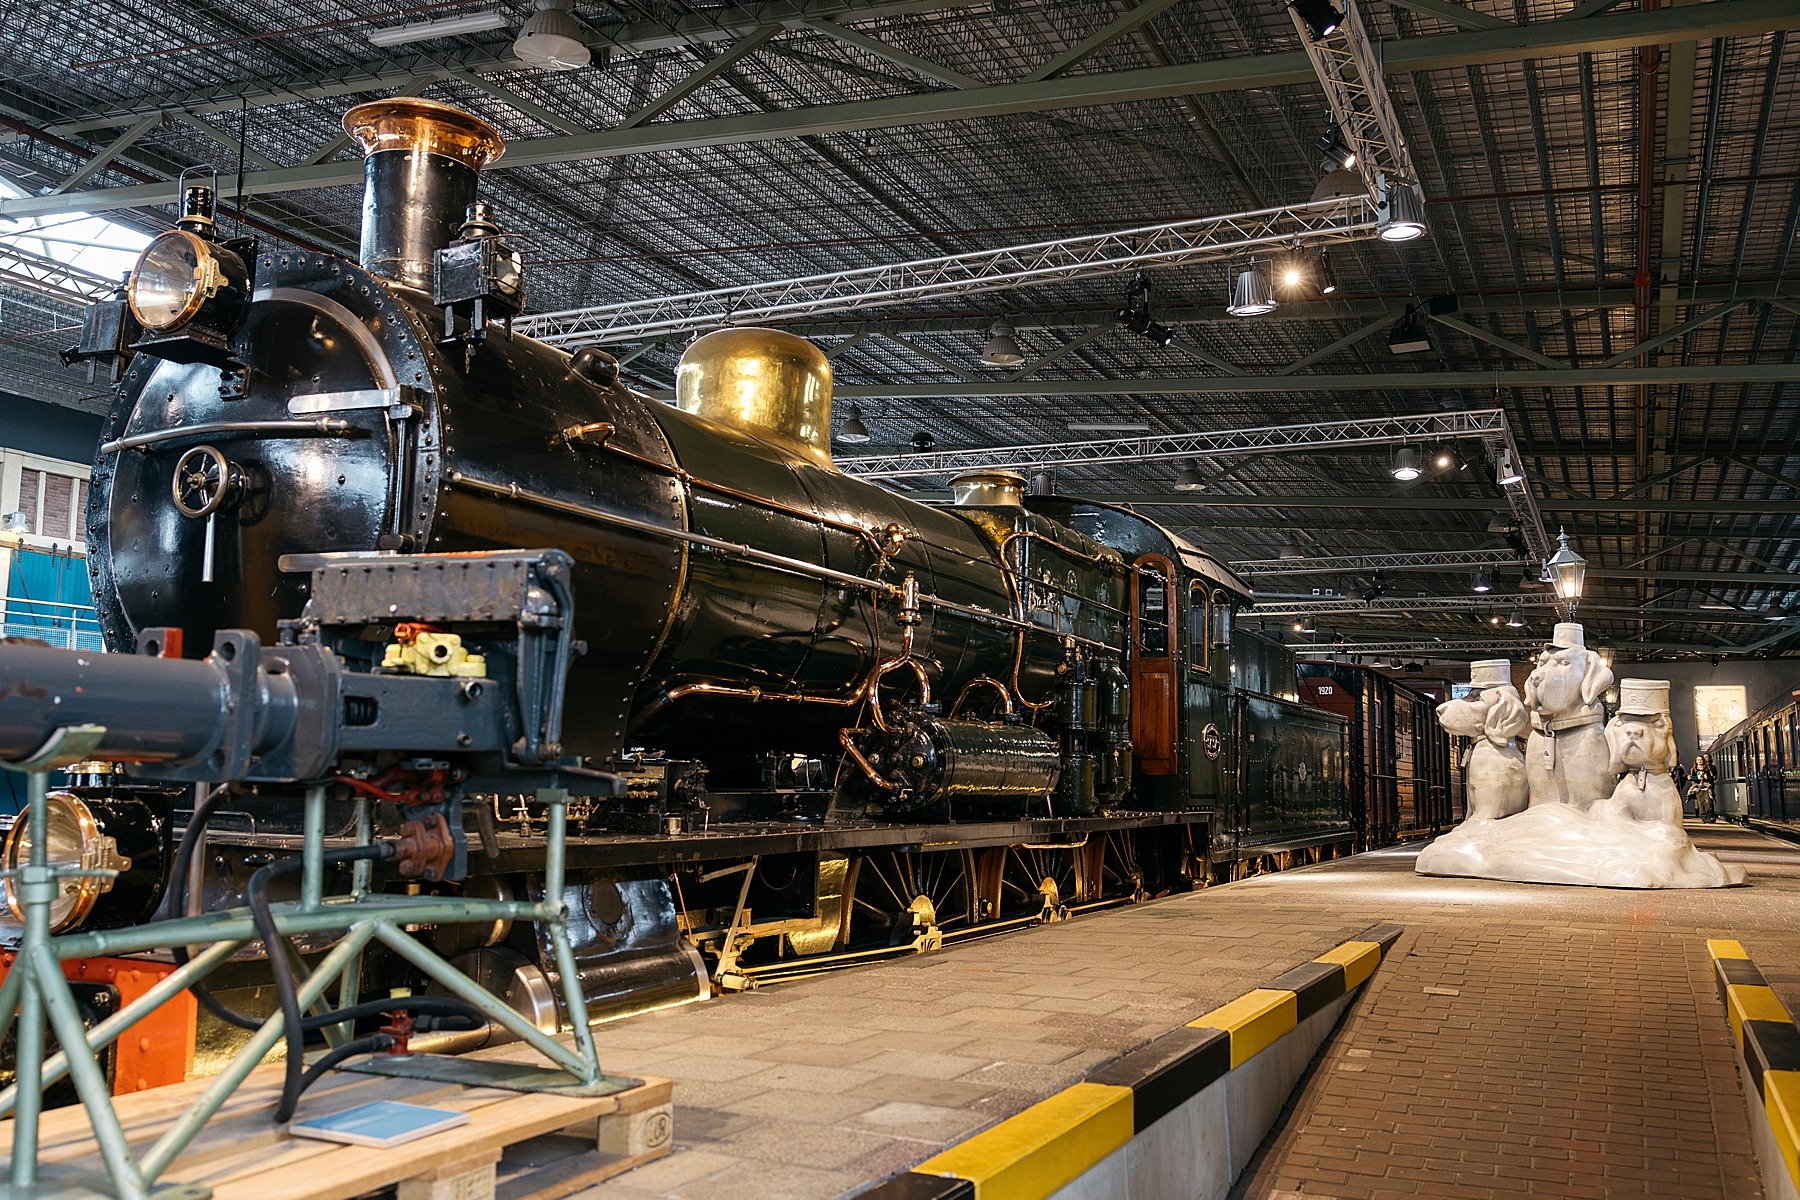 Spoorwegmuseum, l'incroyable musée du train de Utrecht 102